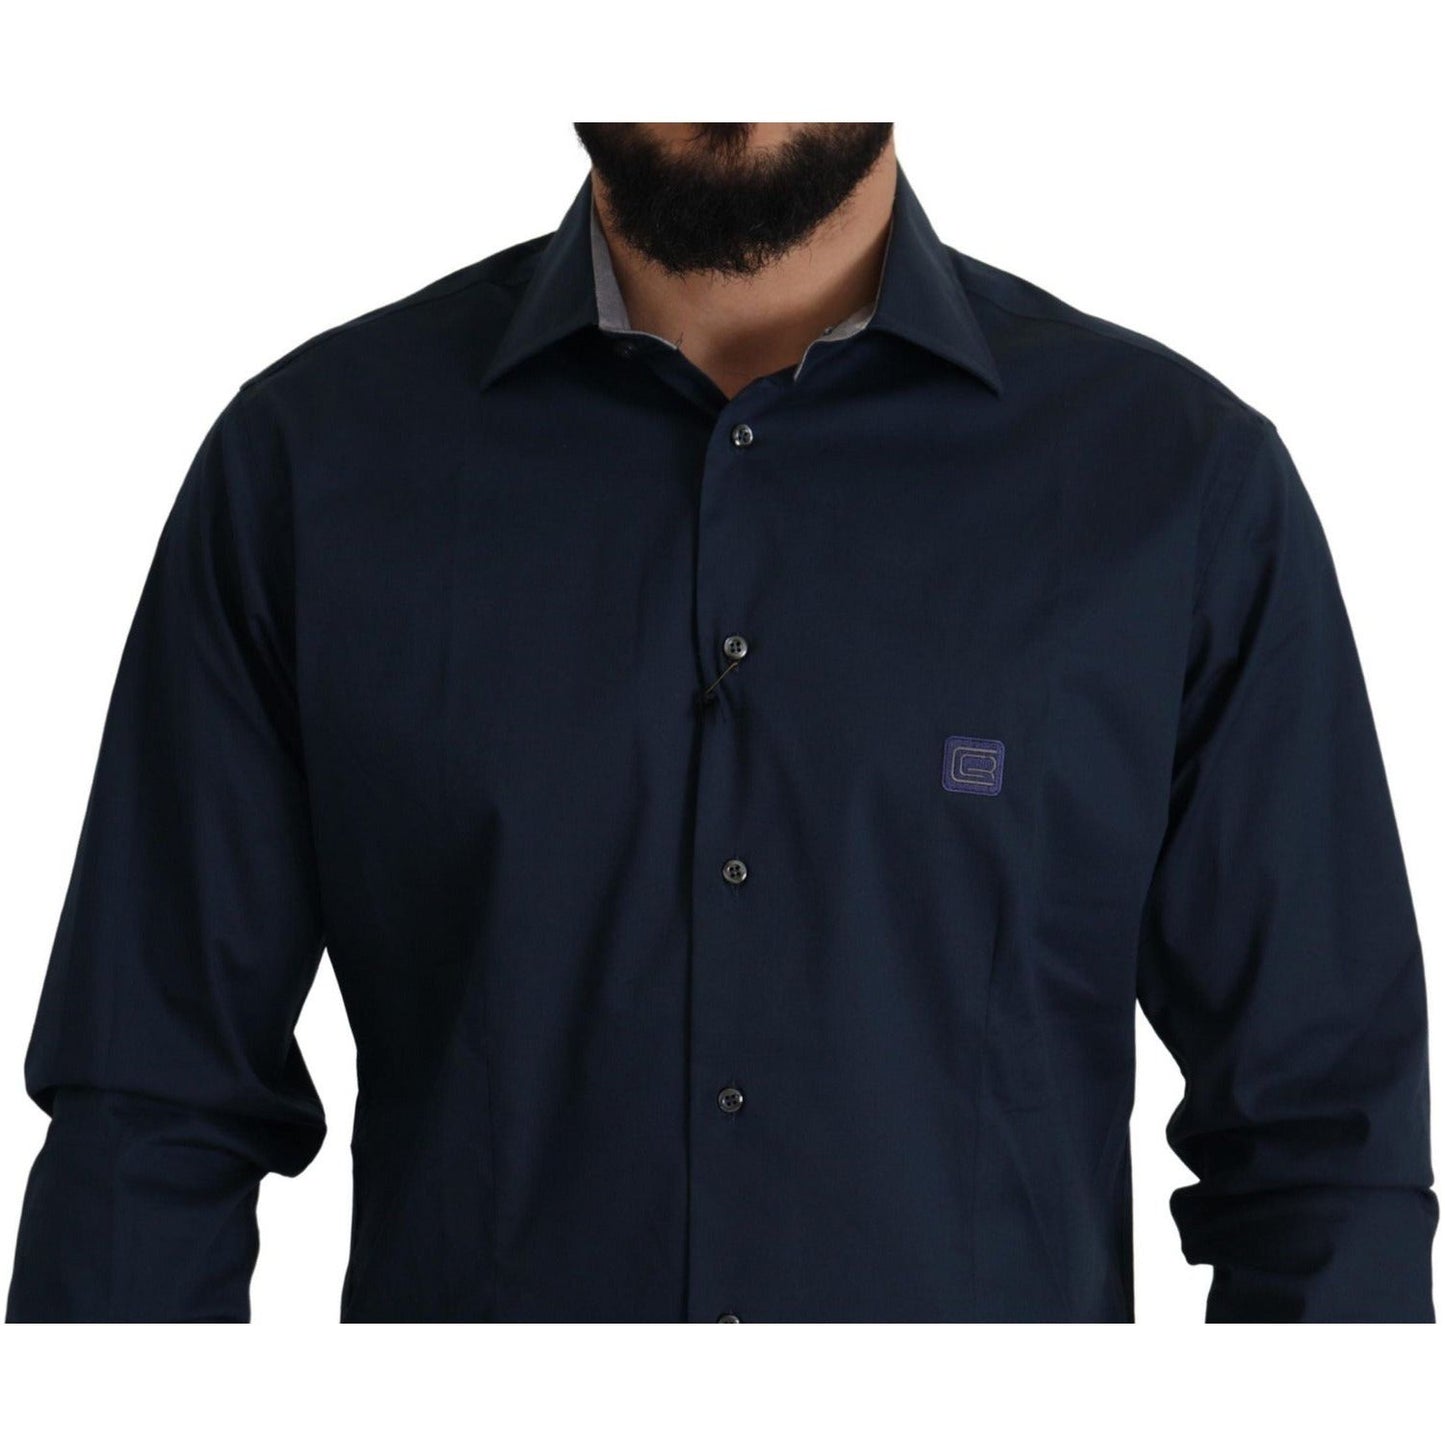 Roberto Cavalli Navy Elegance Cotton Dress Shirt navy-blue-cotton-dress-formal-shirt IMG_2049-scaled-2c79cd73-0fa.jpg